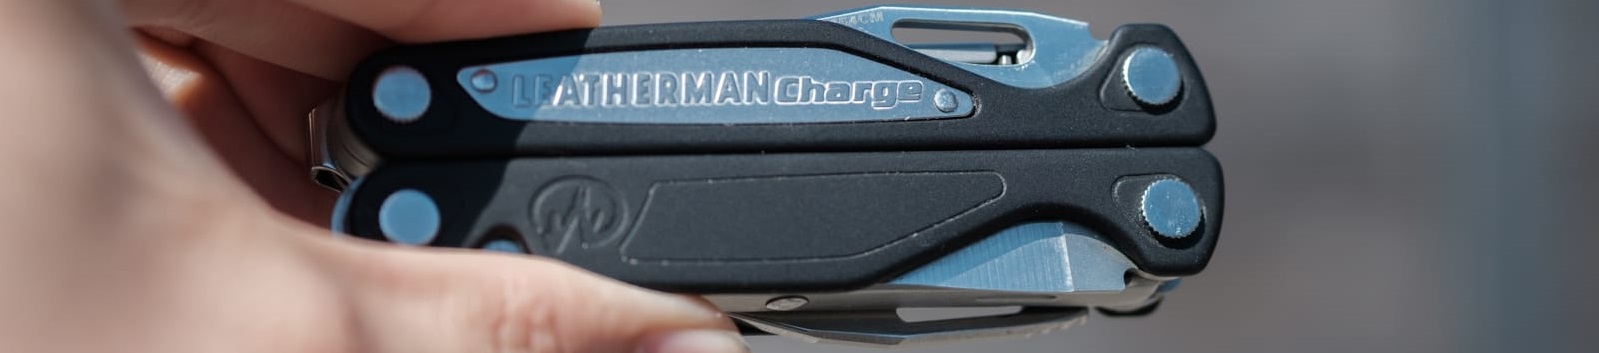 Мультитул Leatherman Charge ALX 830714 с черными алюминиевыми пластинами на рукоятках